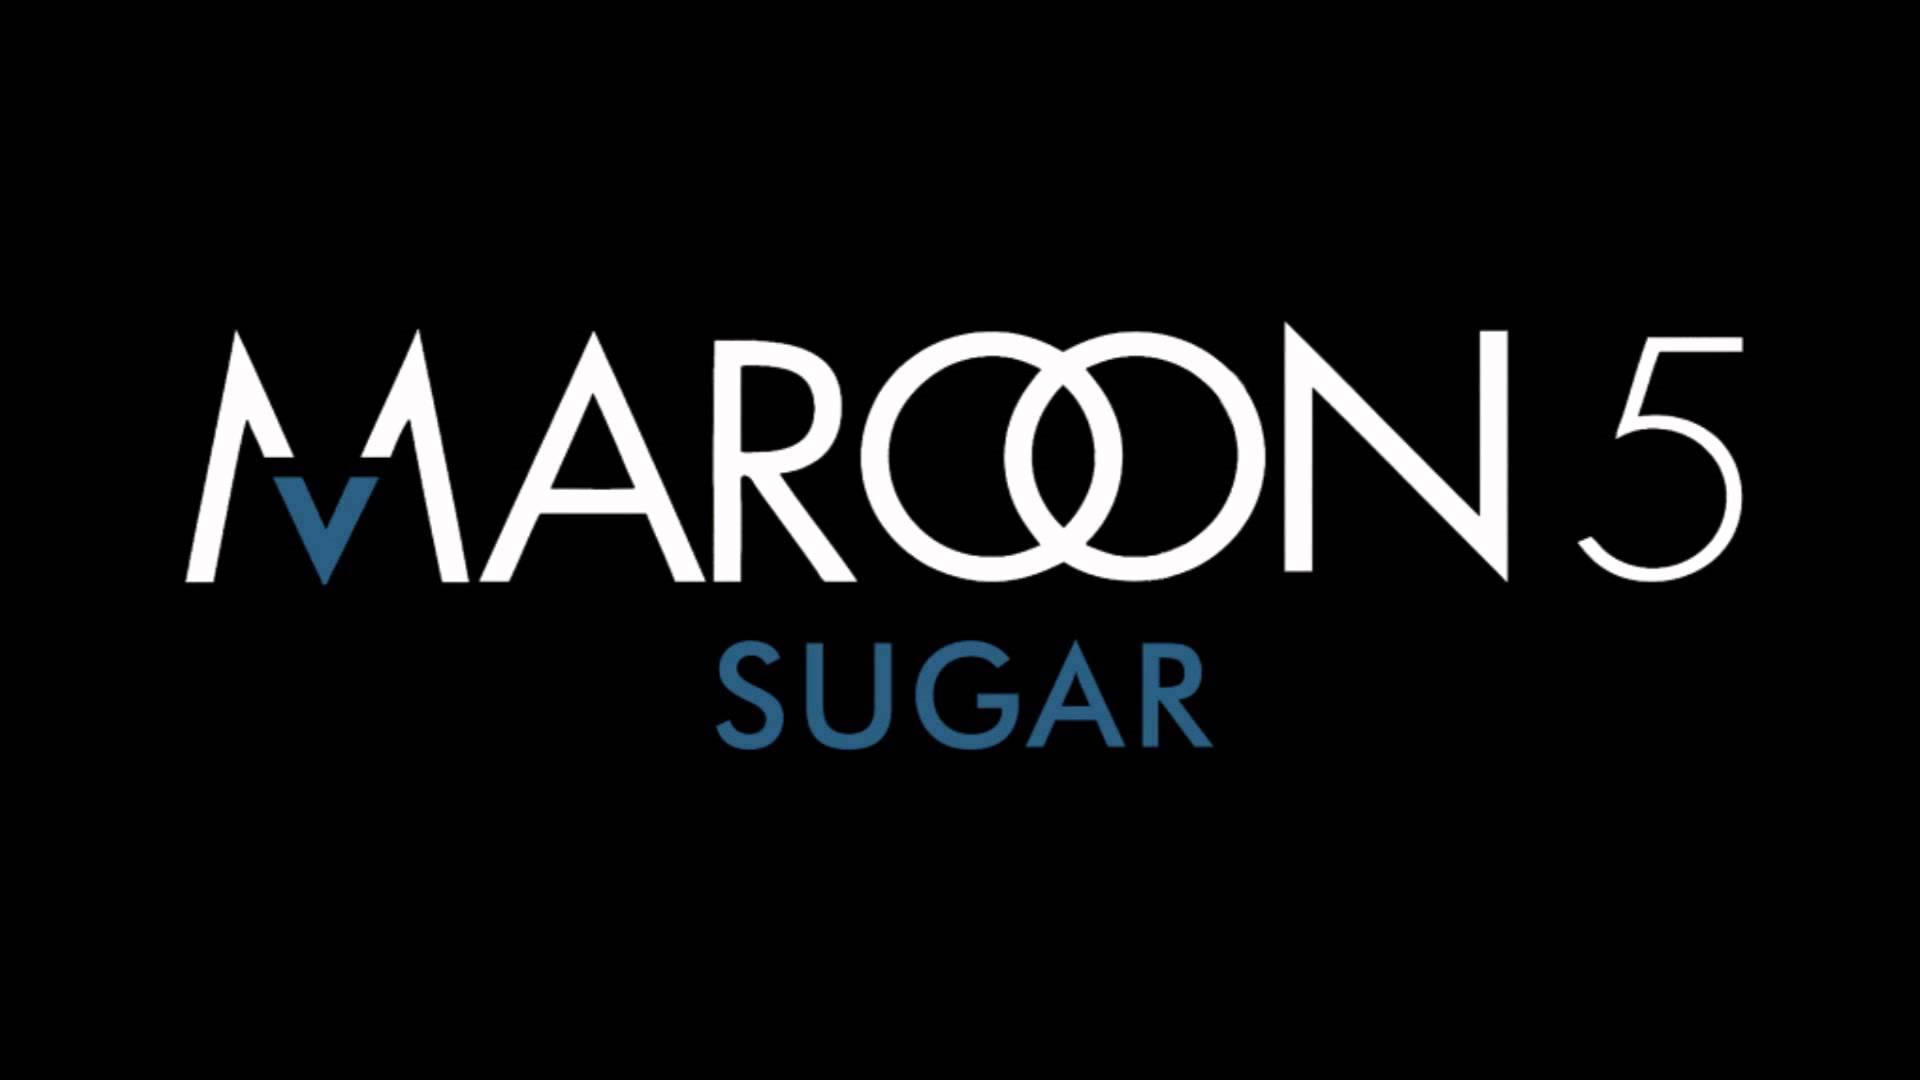 Maroon5 Azúcar Fondo Negro. Fondo de pantalla